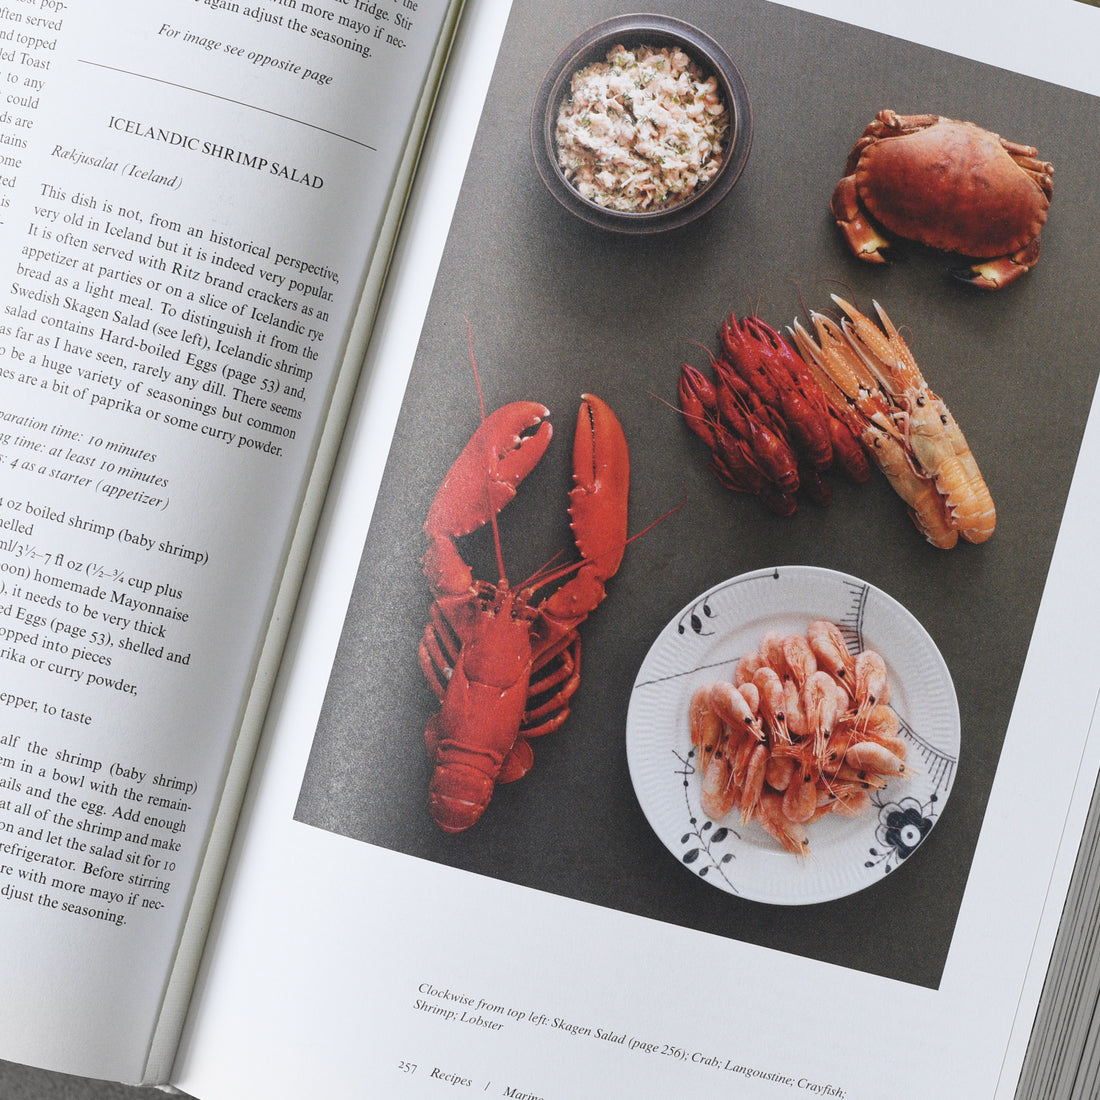 Nordic Cook Book